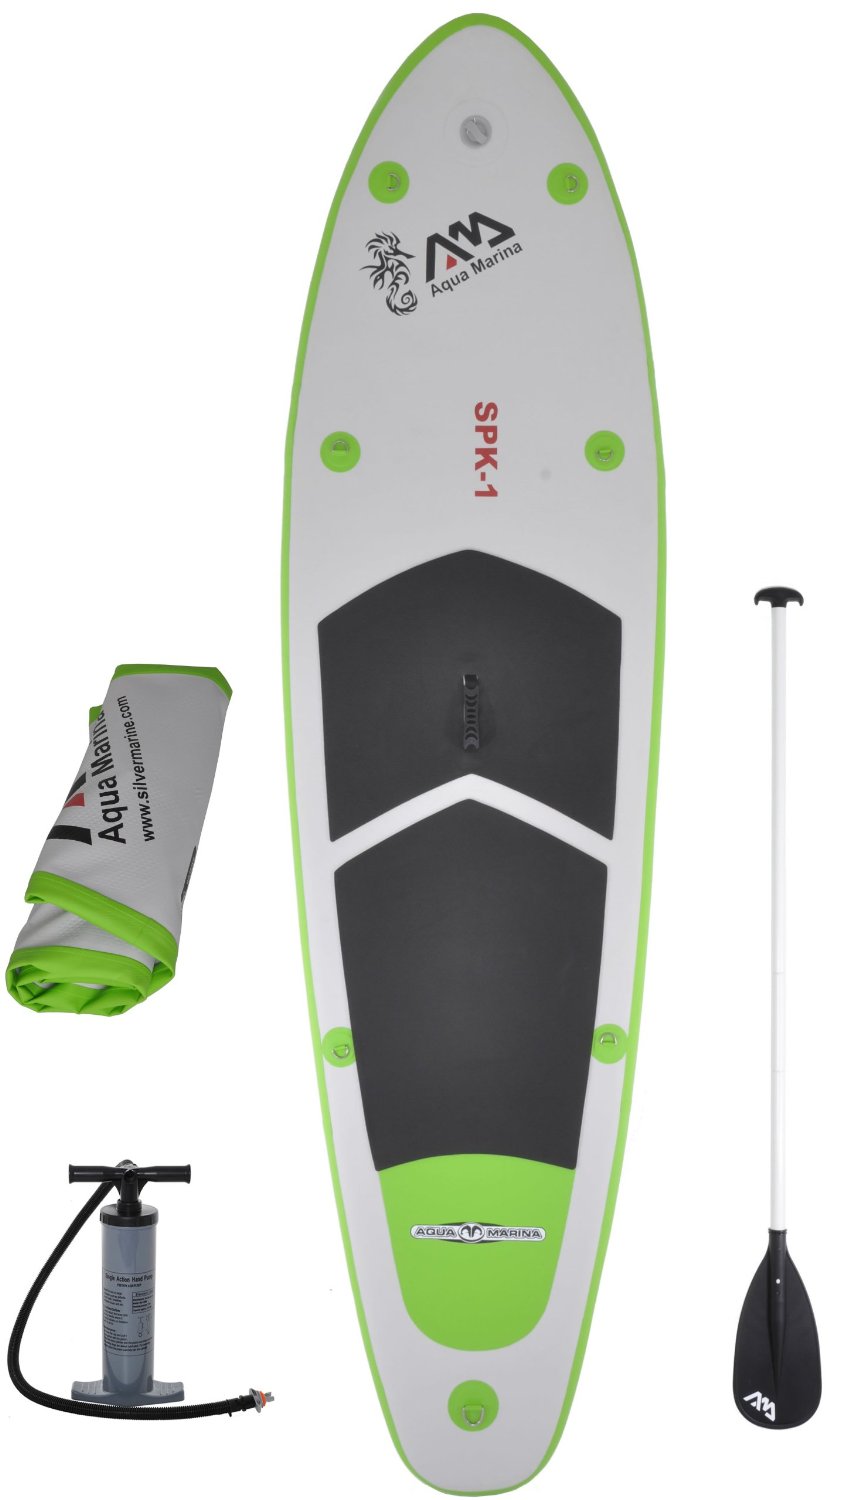 Tabla Stand Up Paddle Board Spk-1